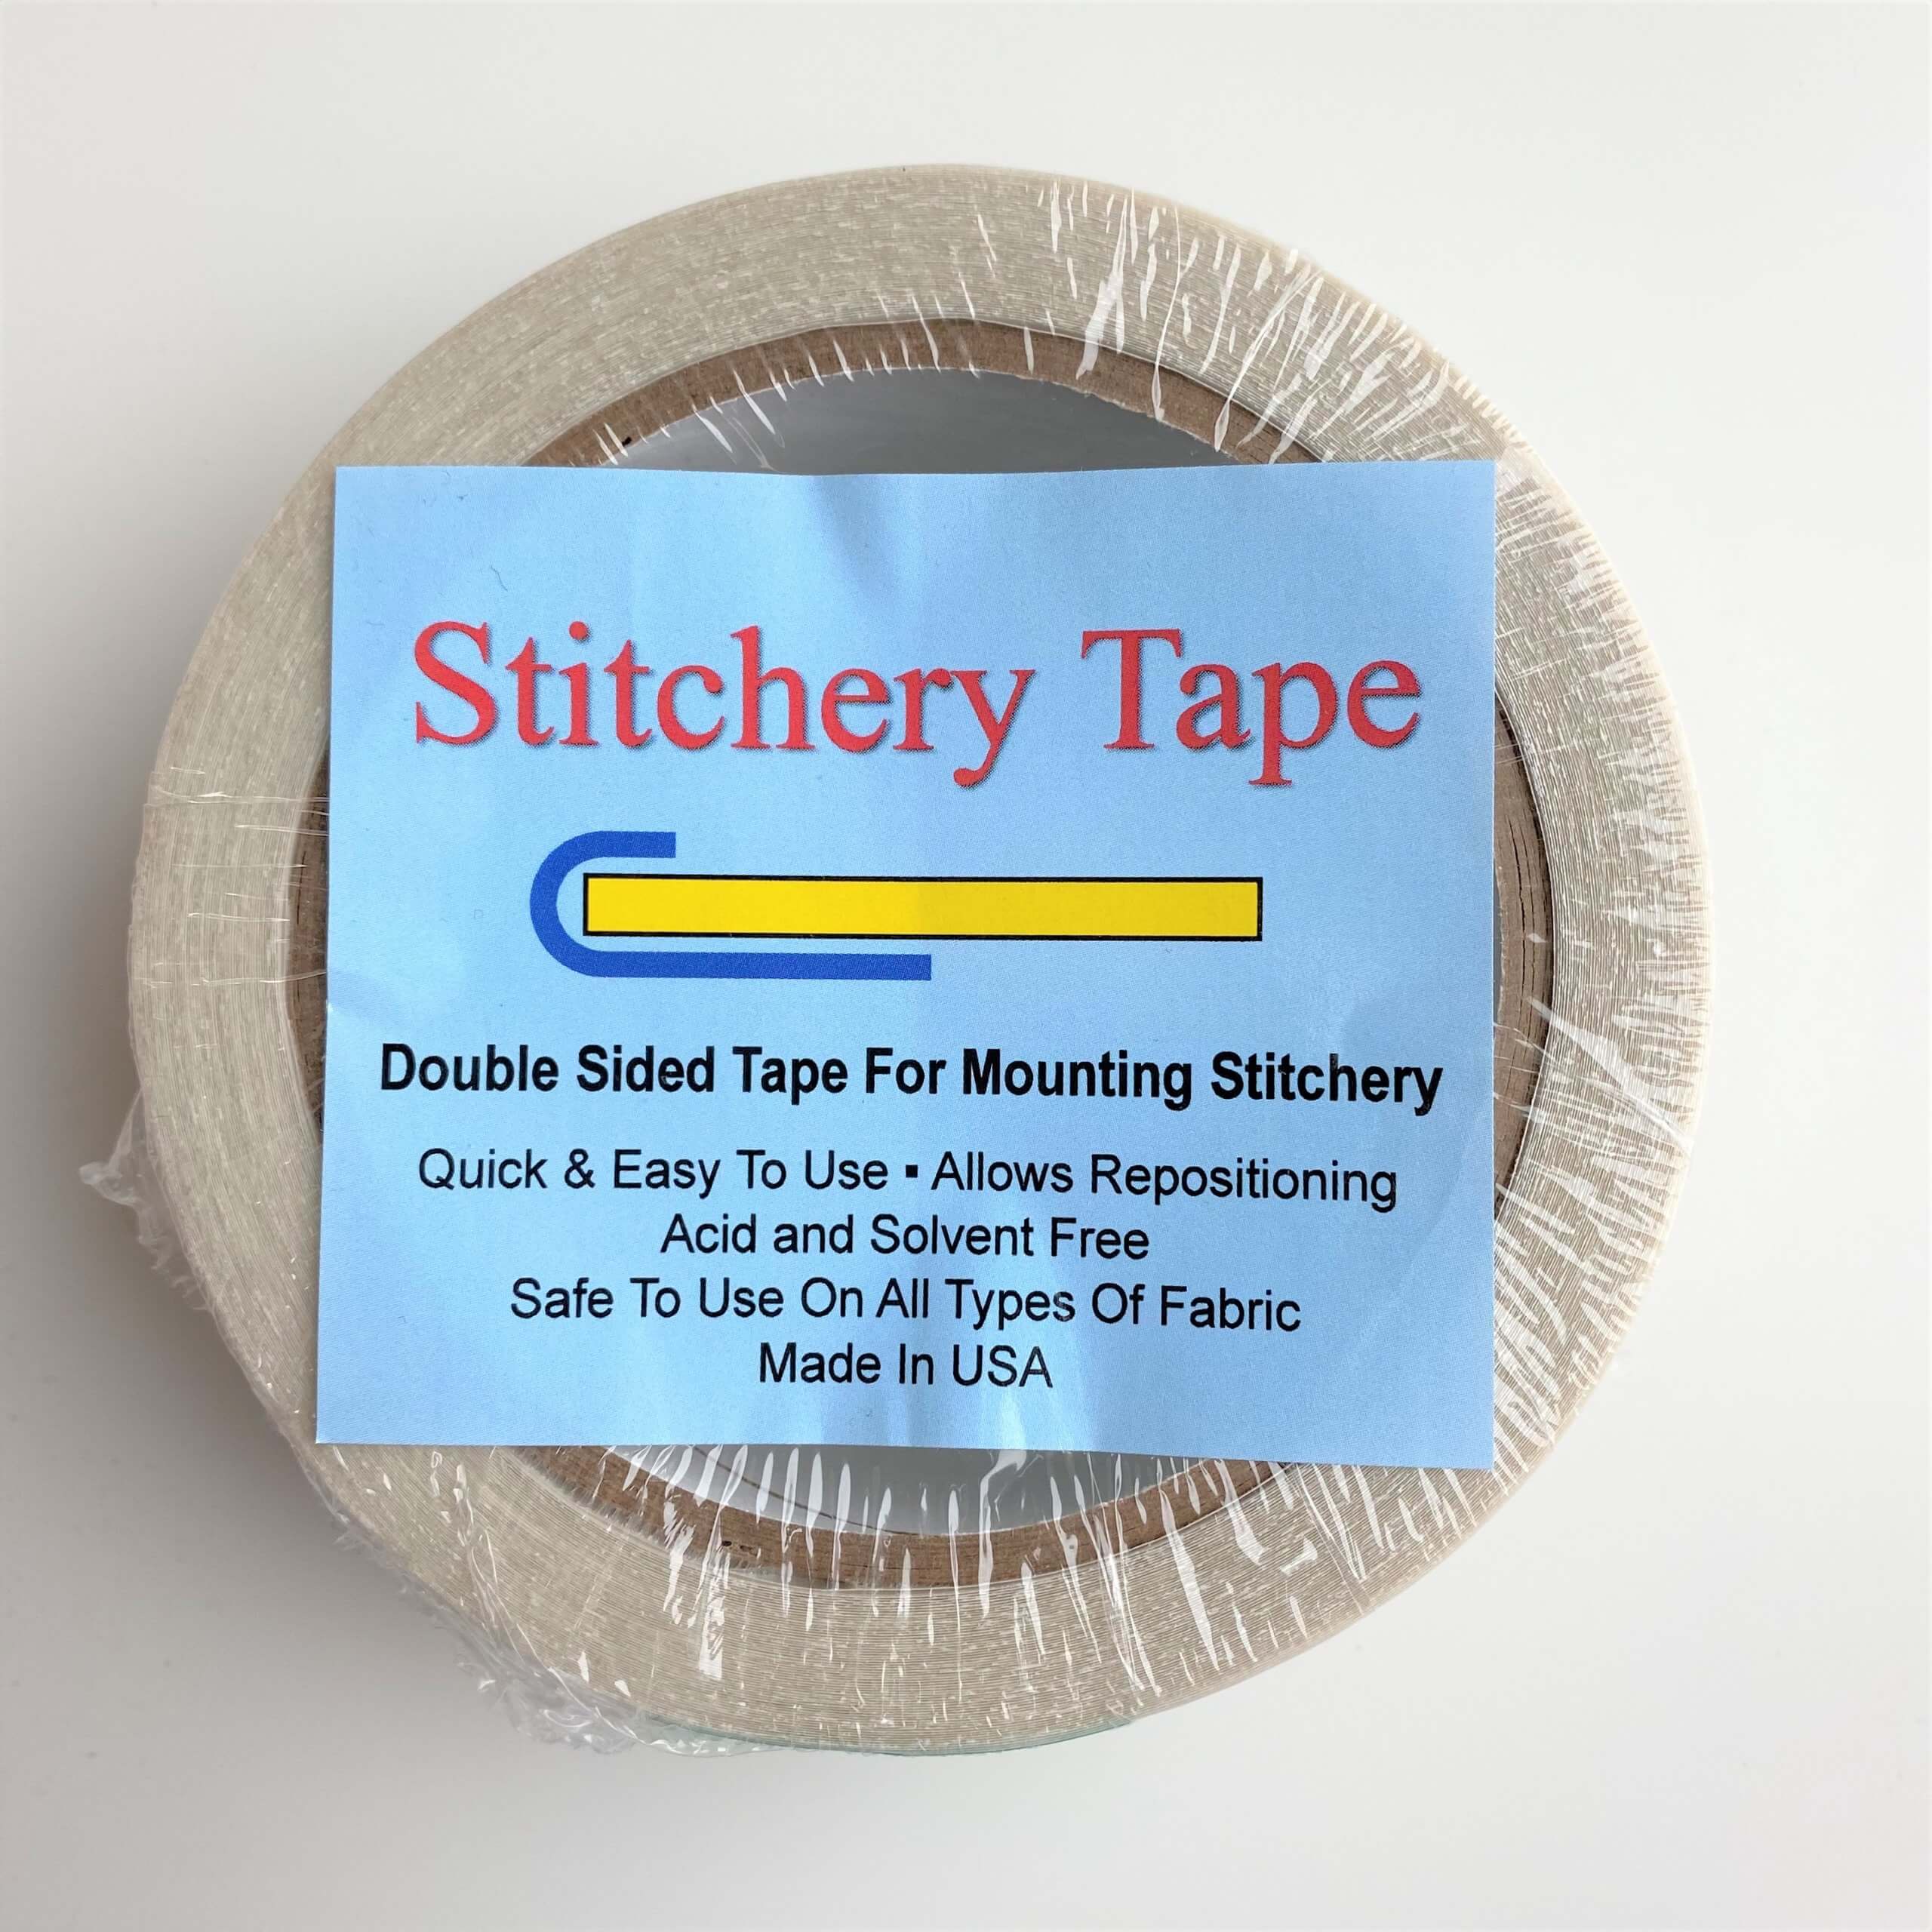 Stitchery Tape aka Framing Tape